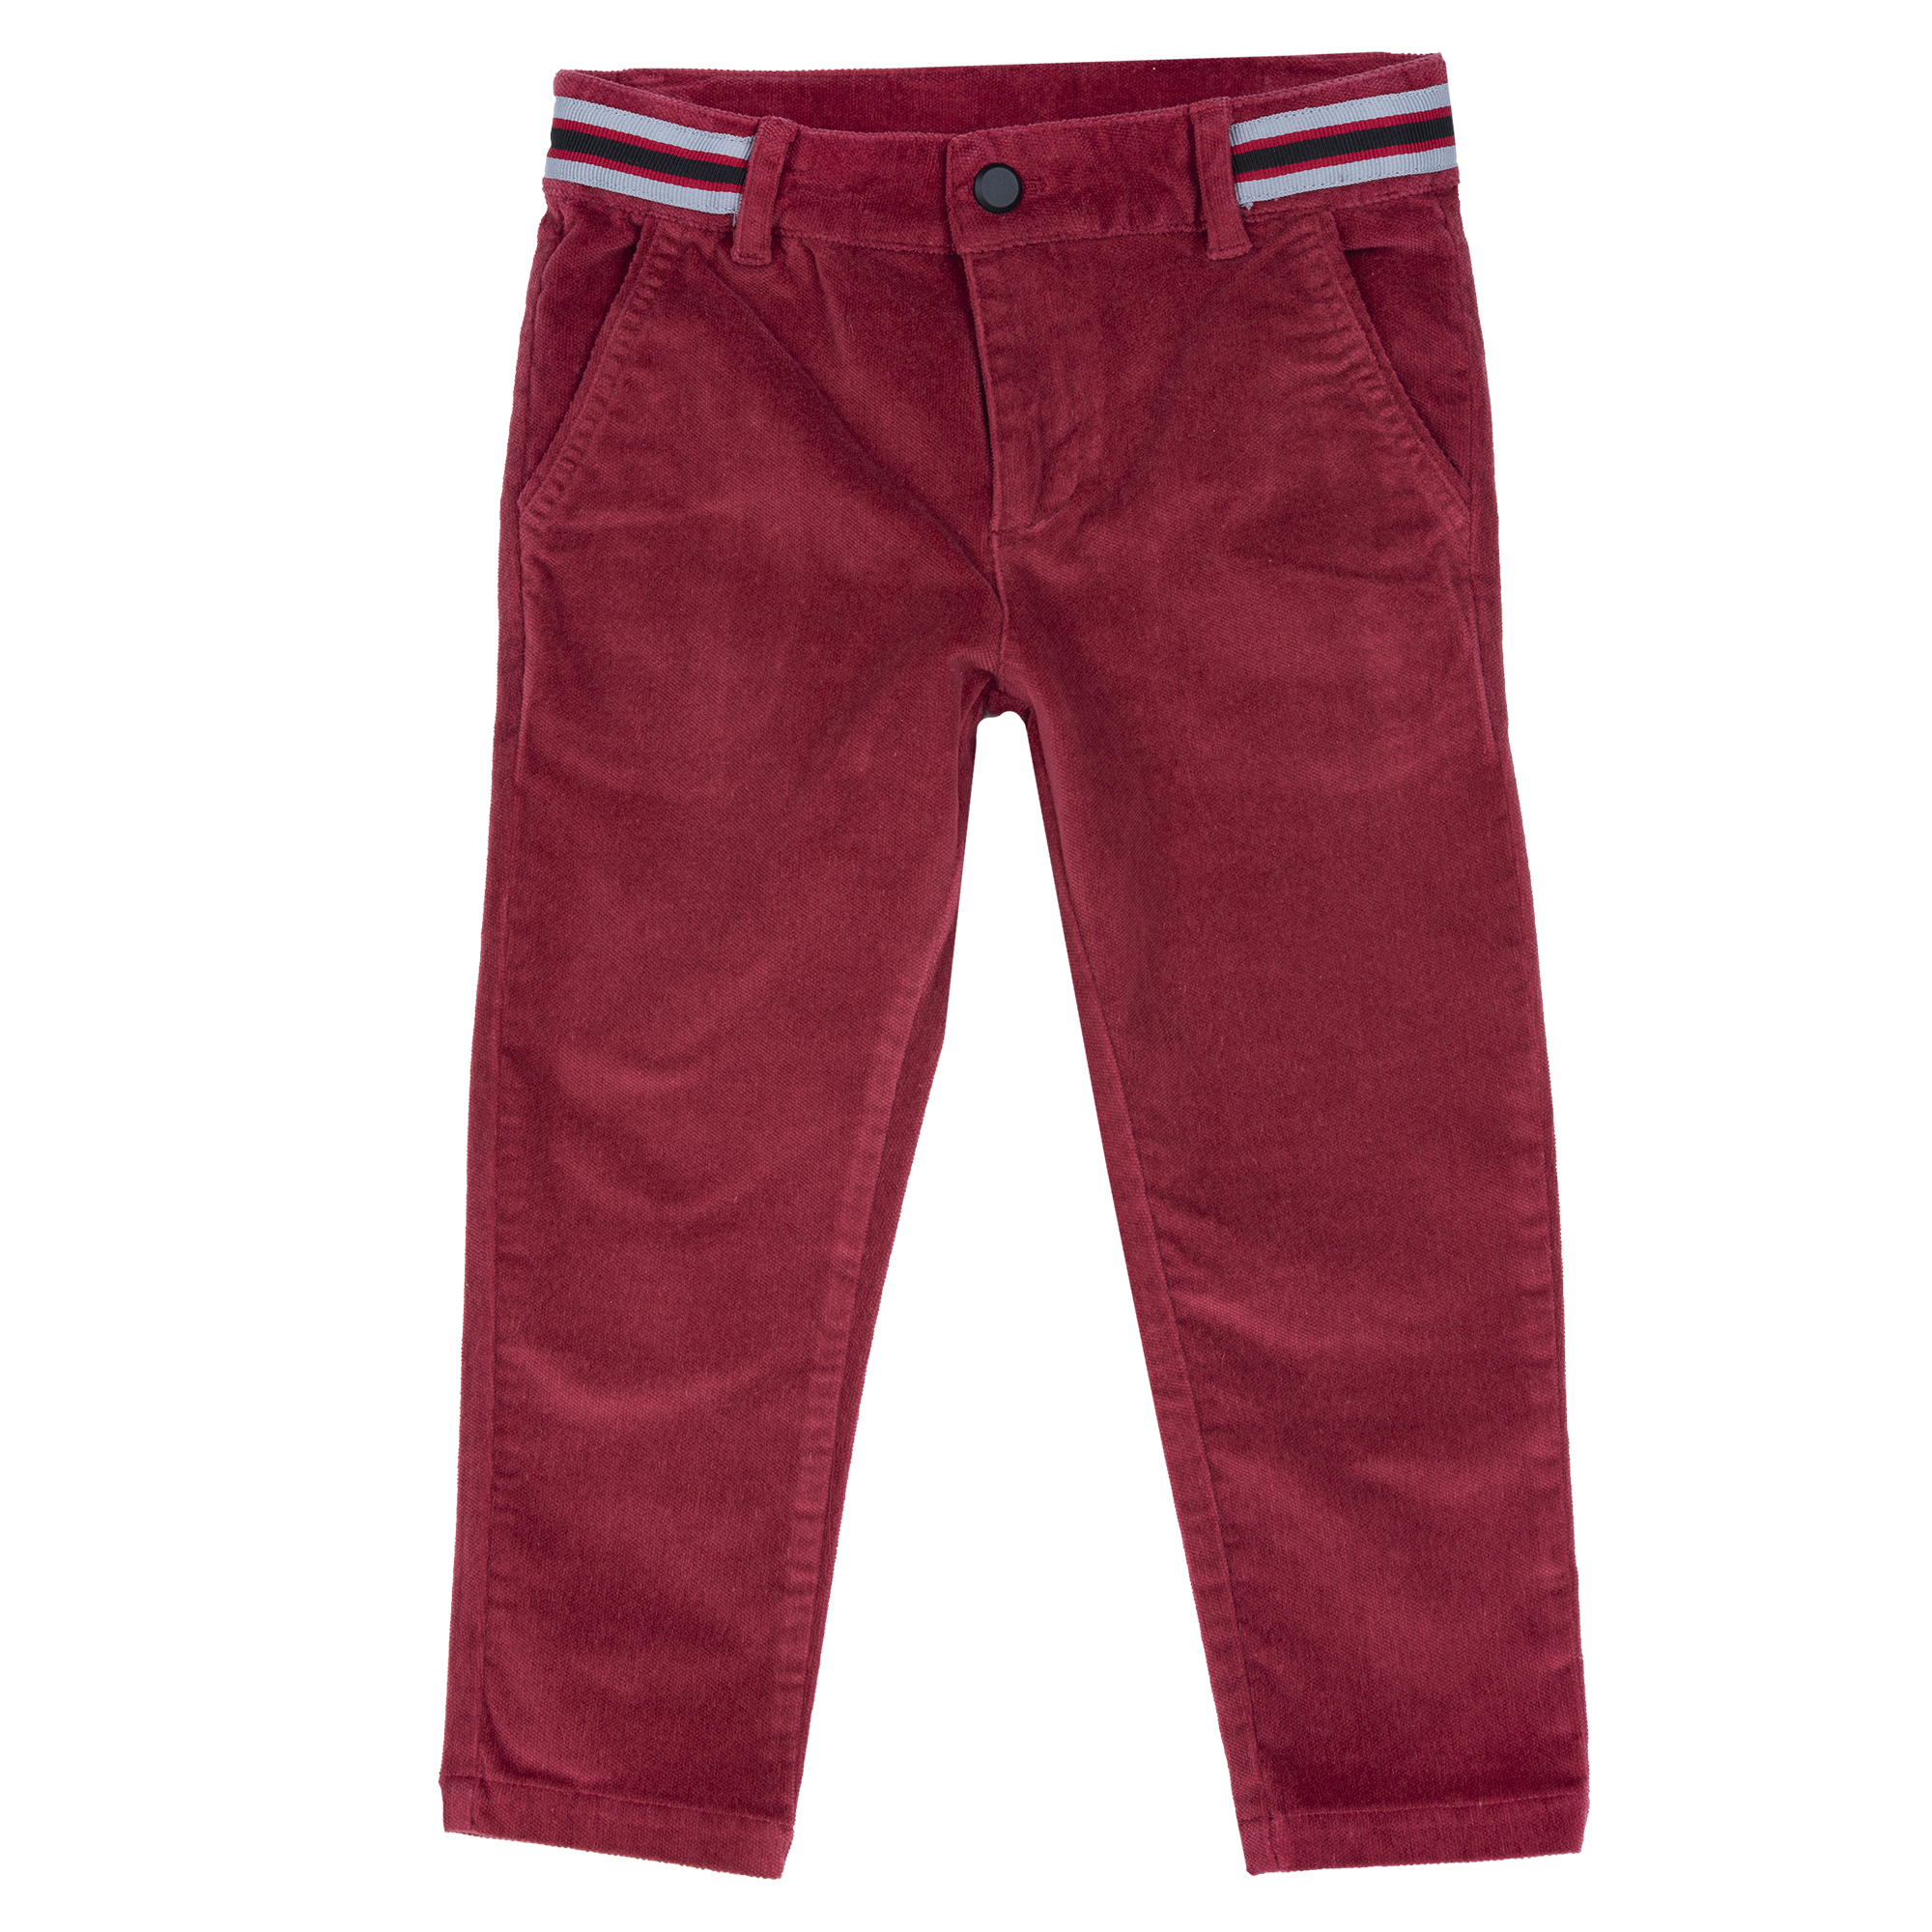 Pantaloni Copii Chicco, Rosu, 08711-63mc